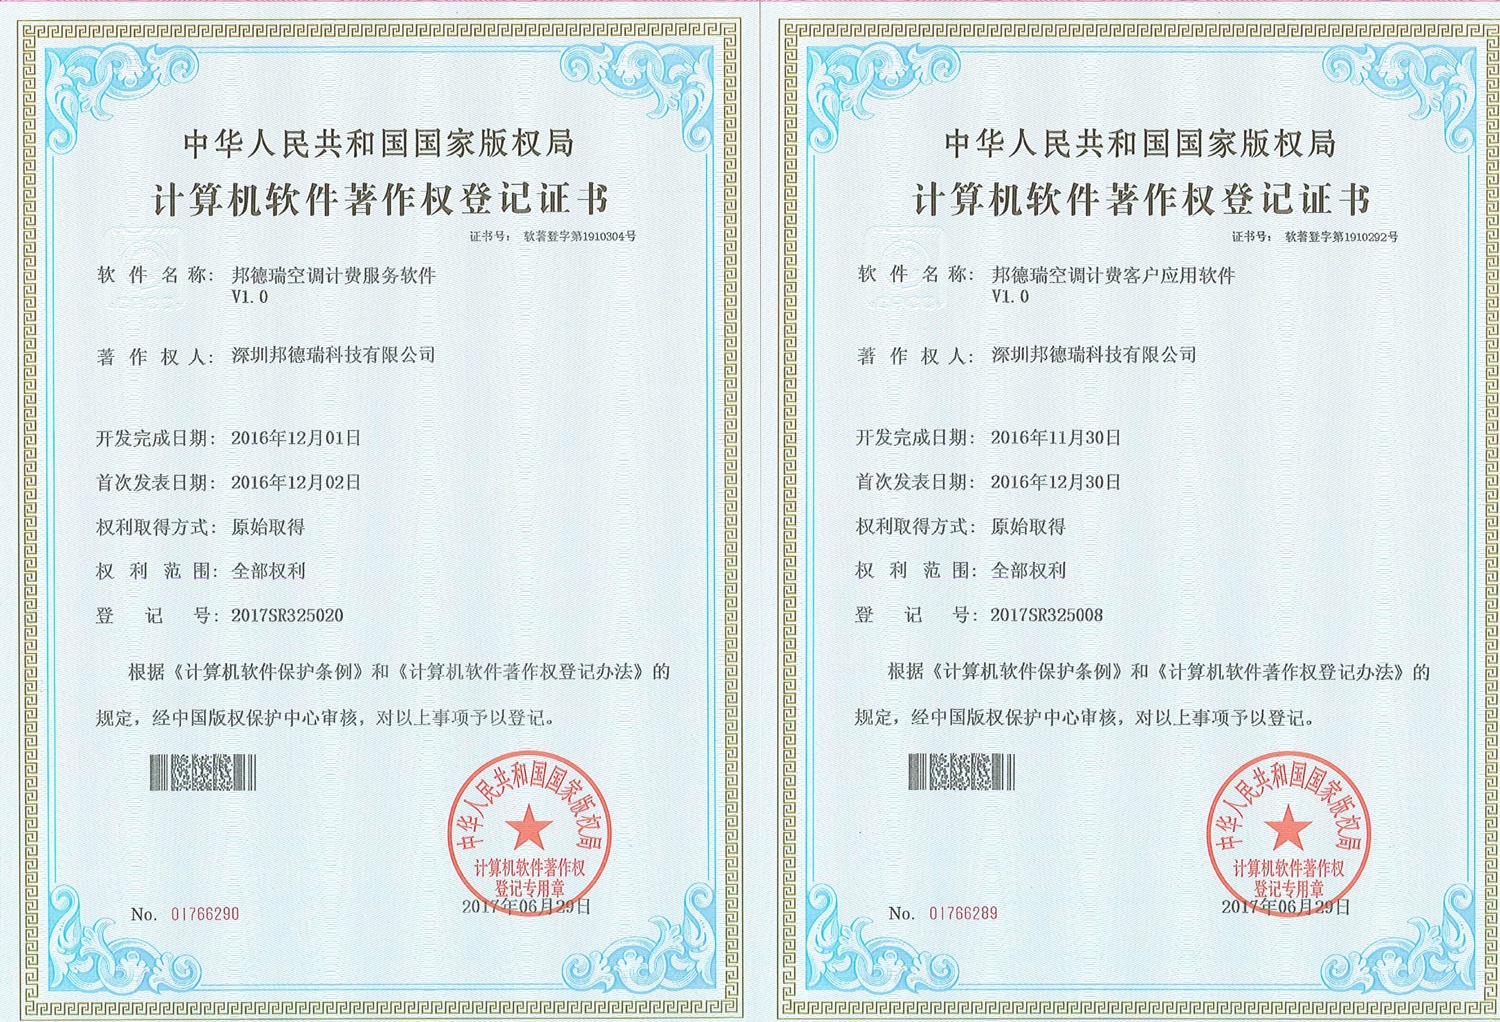 Billing software copyright certificate